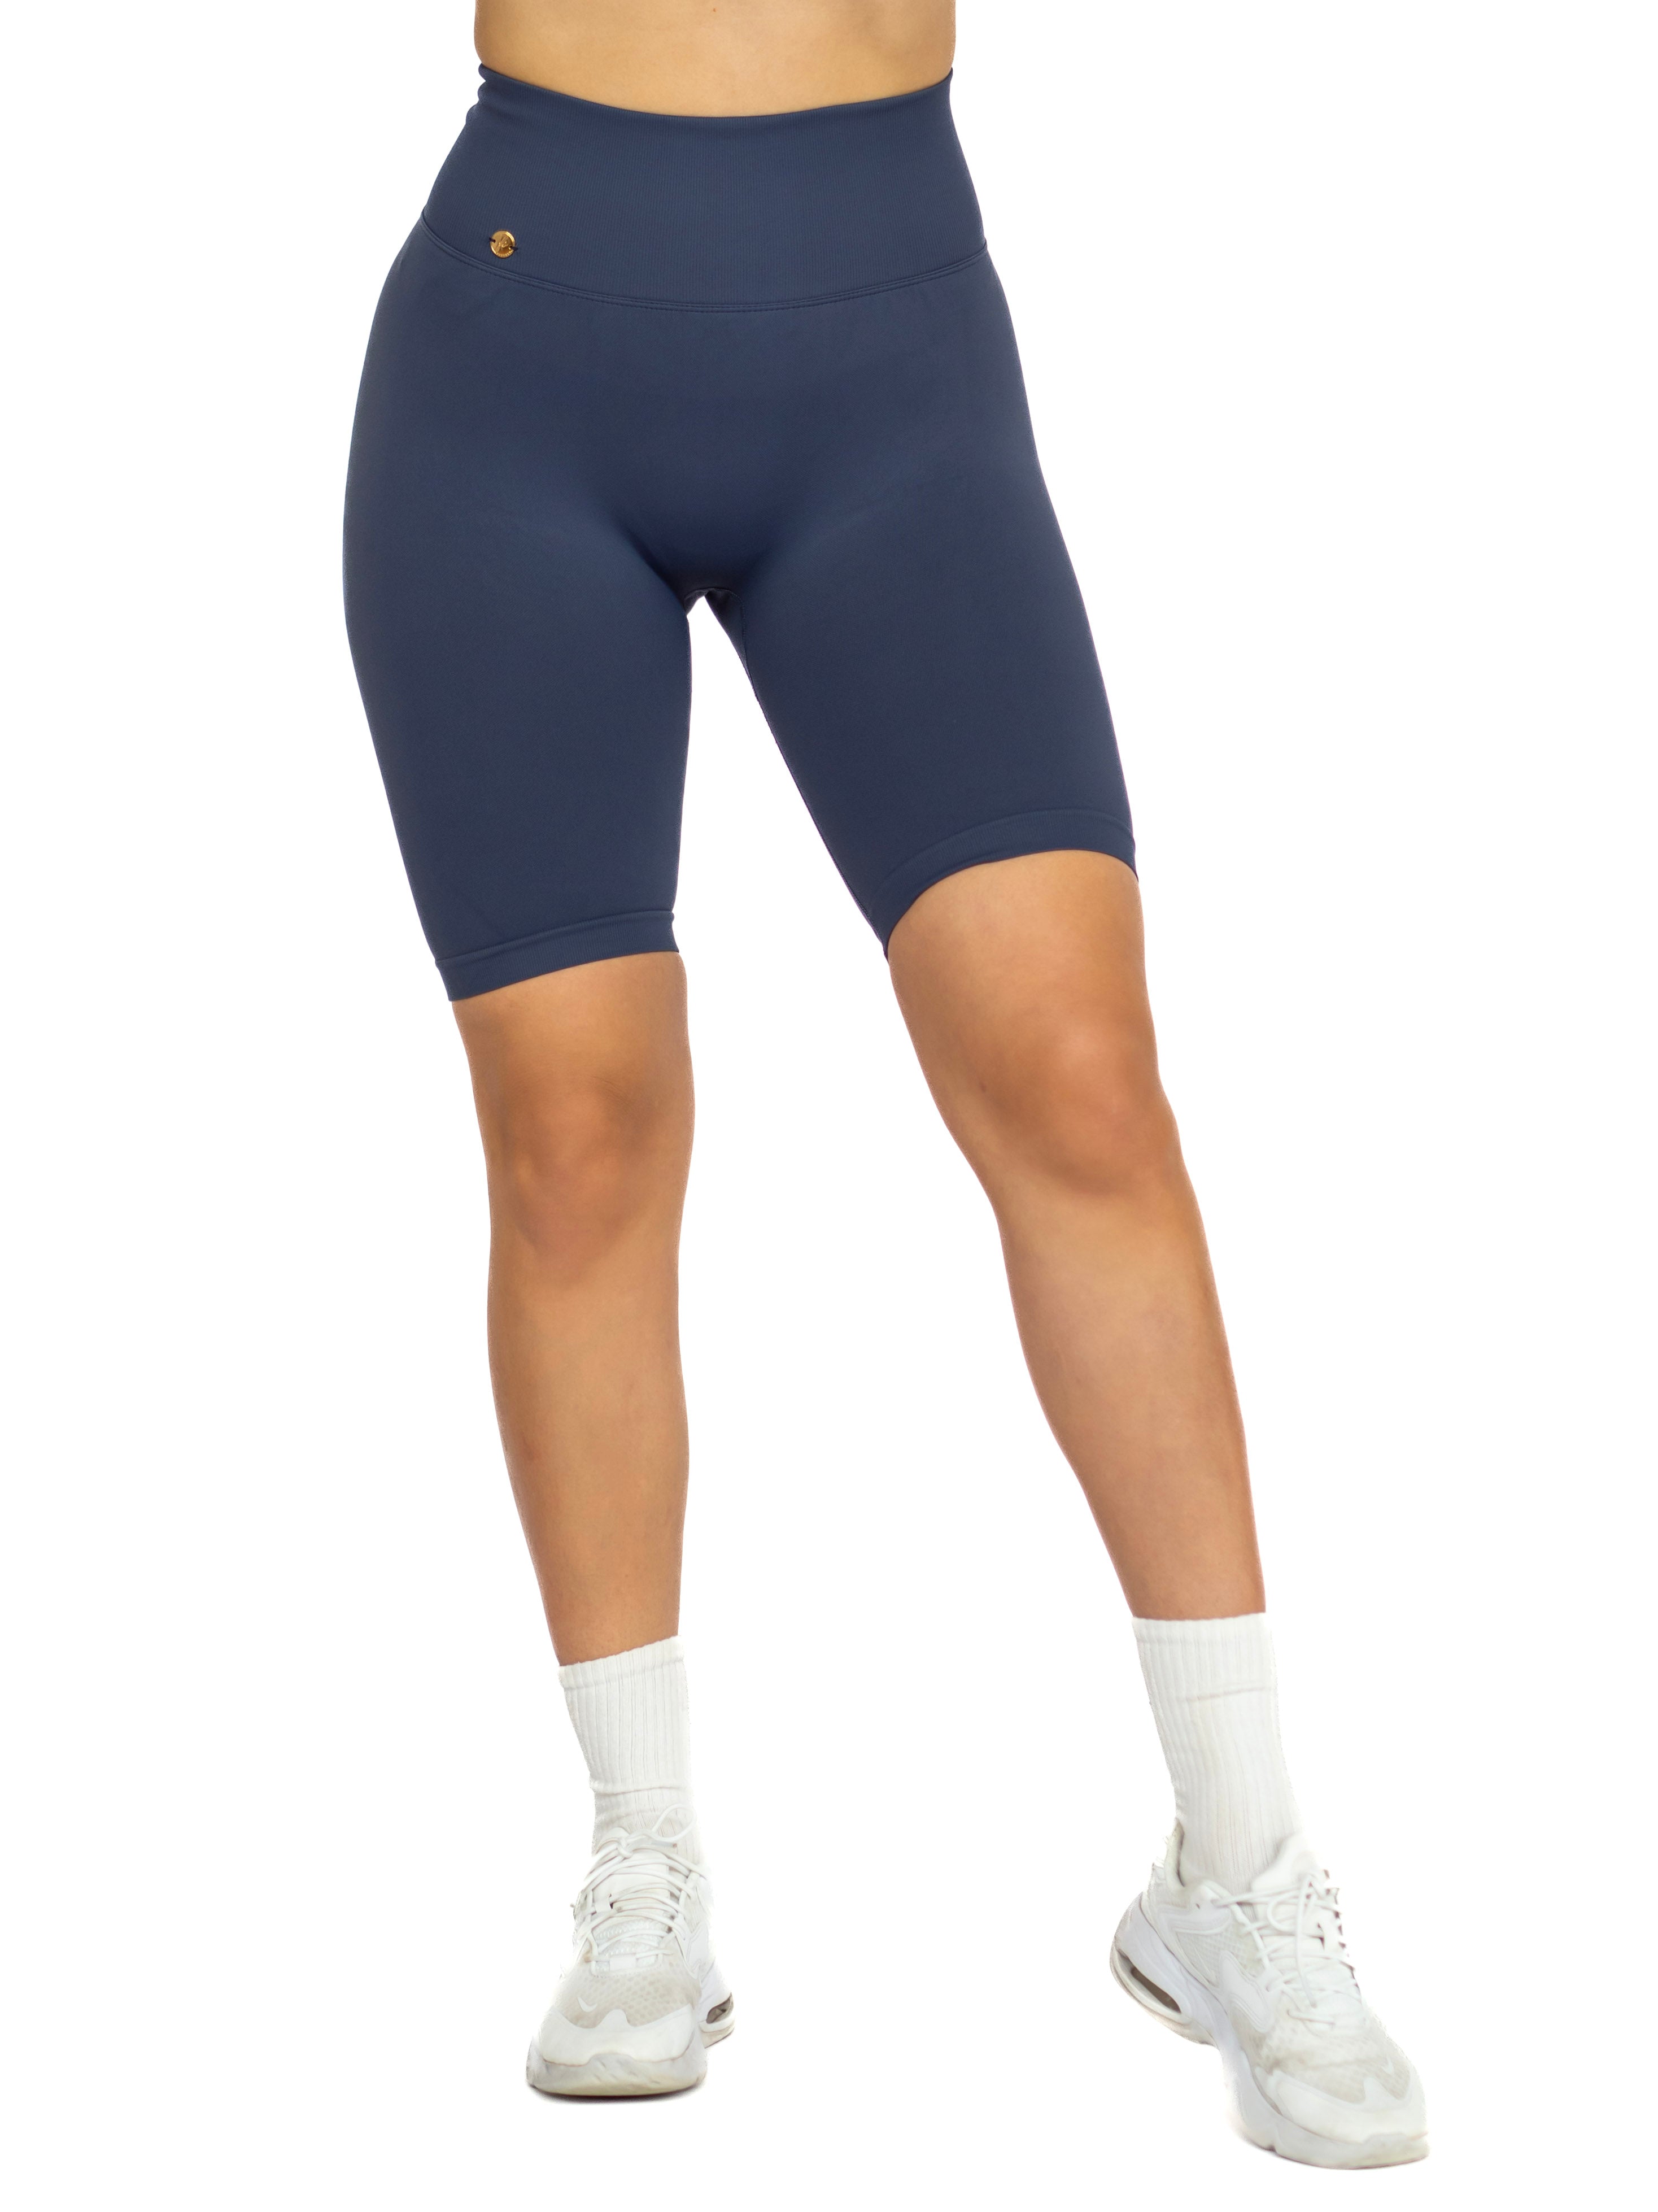 Peachy Biker Shorts - Blueberry